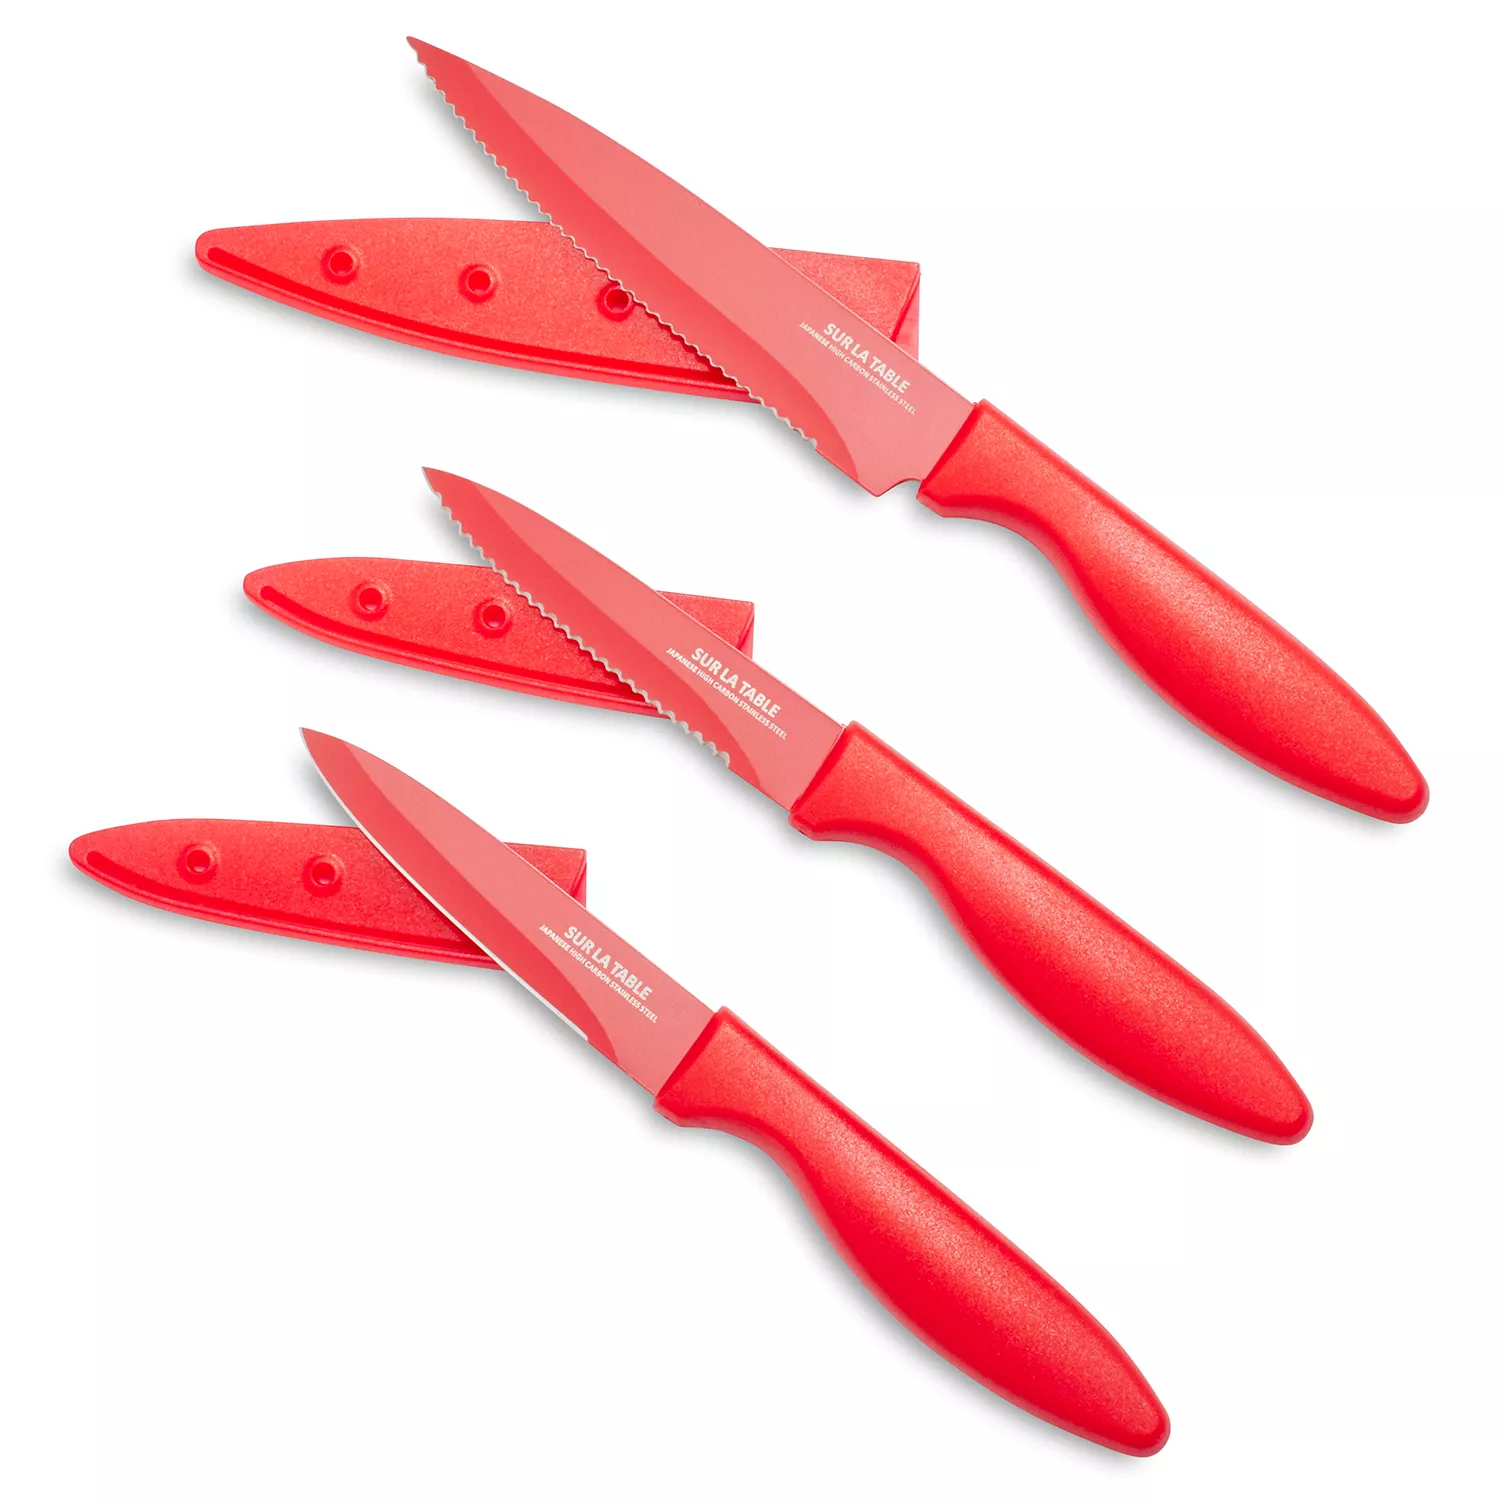 Wusthof Create 3-Piece Paring Knife Set, Multicolored